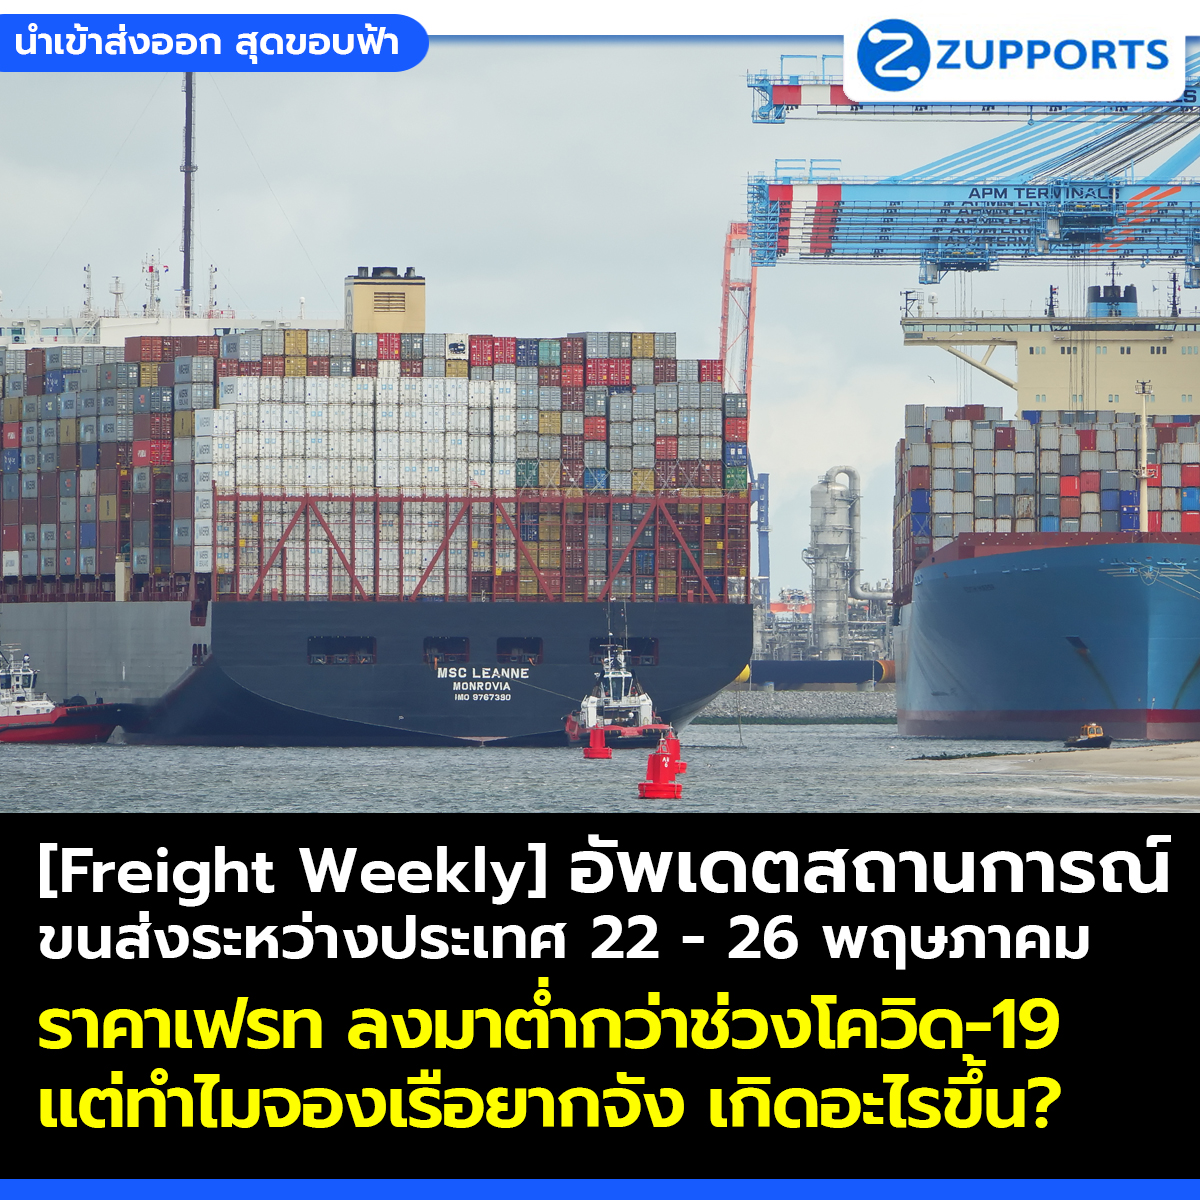 [Freight Weekly] : อัพเดตสถานการณ์ขนส่งสินค้าระหว่างประเทศ ประจำวันที่ 22- 26 พฤษภาคม กับ ZUPPORTS !!! ราคาเฟรท ลงมาต่ำกว่าช่วงโควิด-19 แต่ทำไมจองเรือยากจัง เกิดอะไรขึ้น?